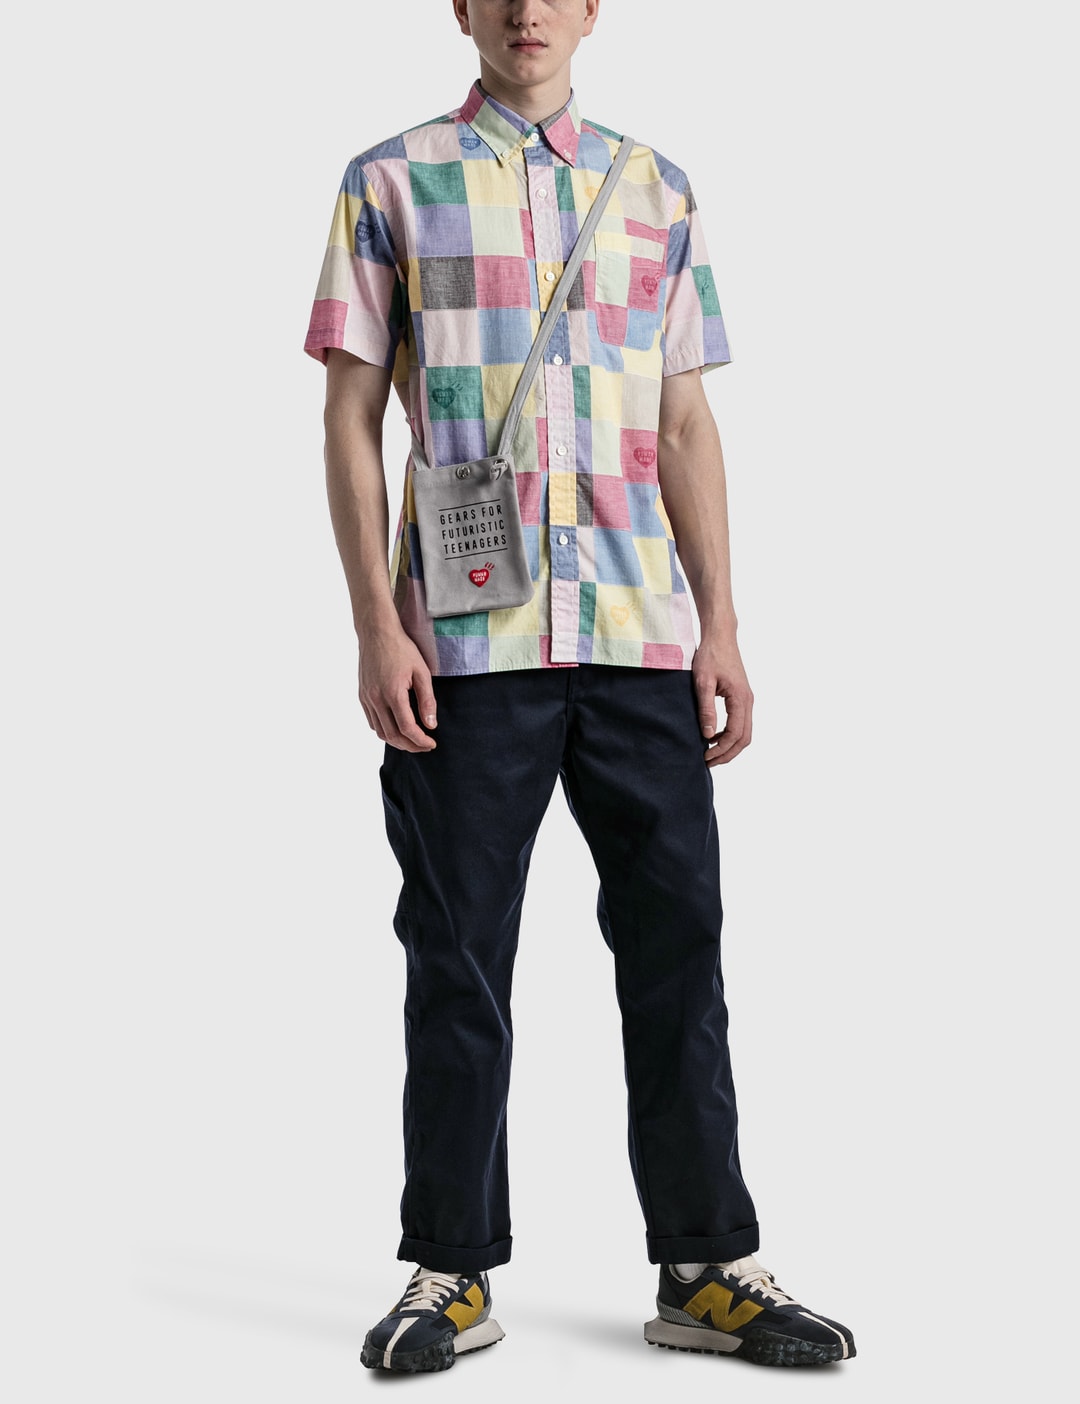 Human Made - Human Made Patchwork Shirt | HBX - Globally Curated ...